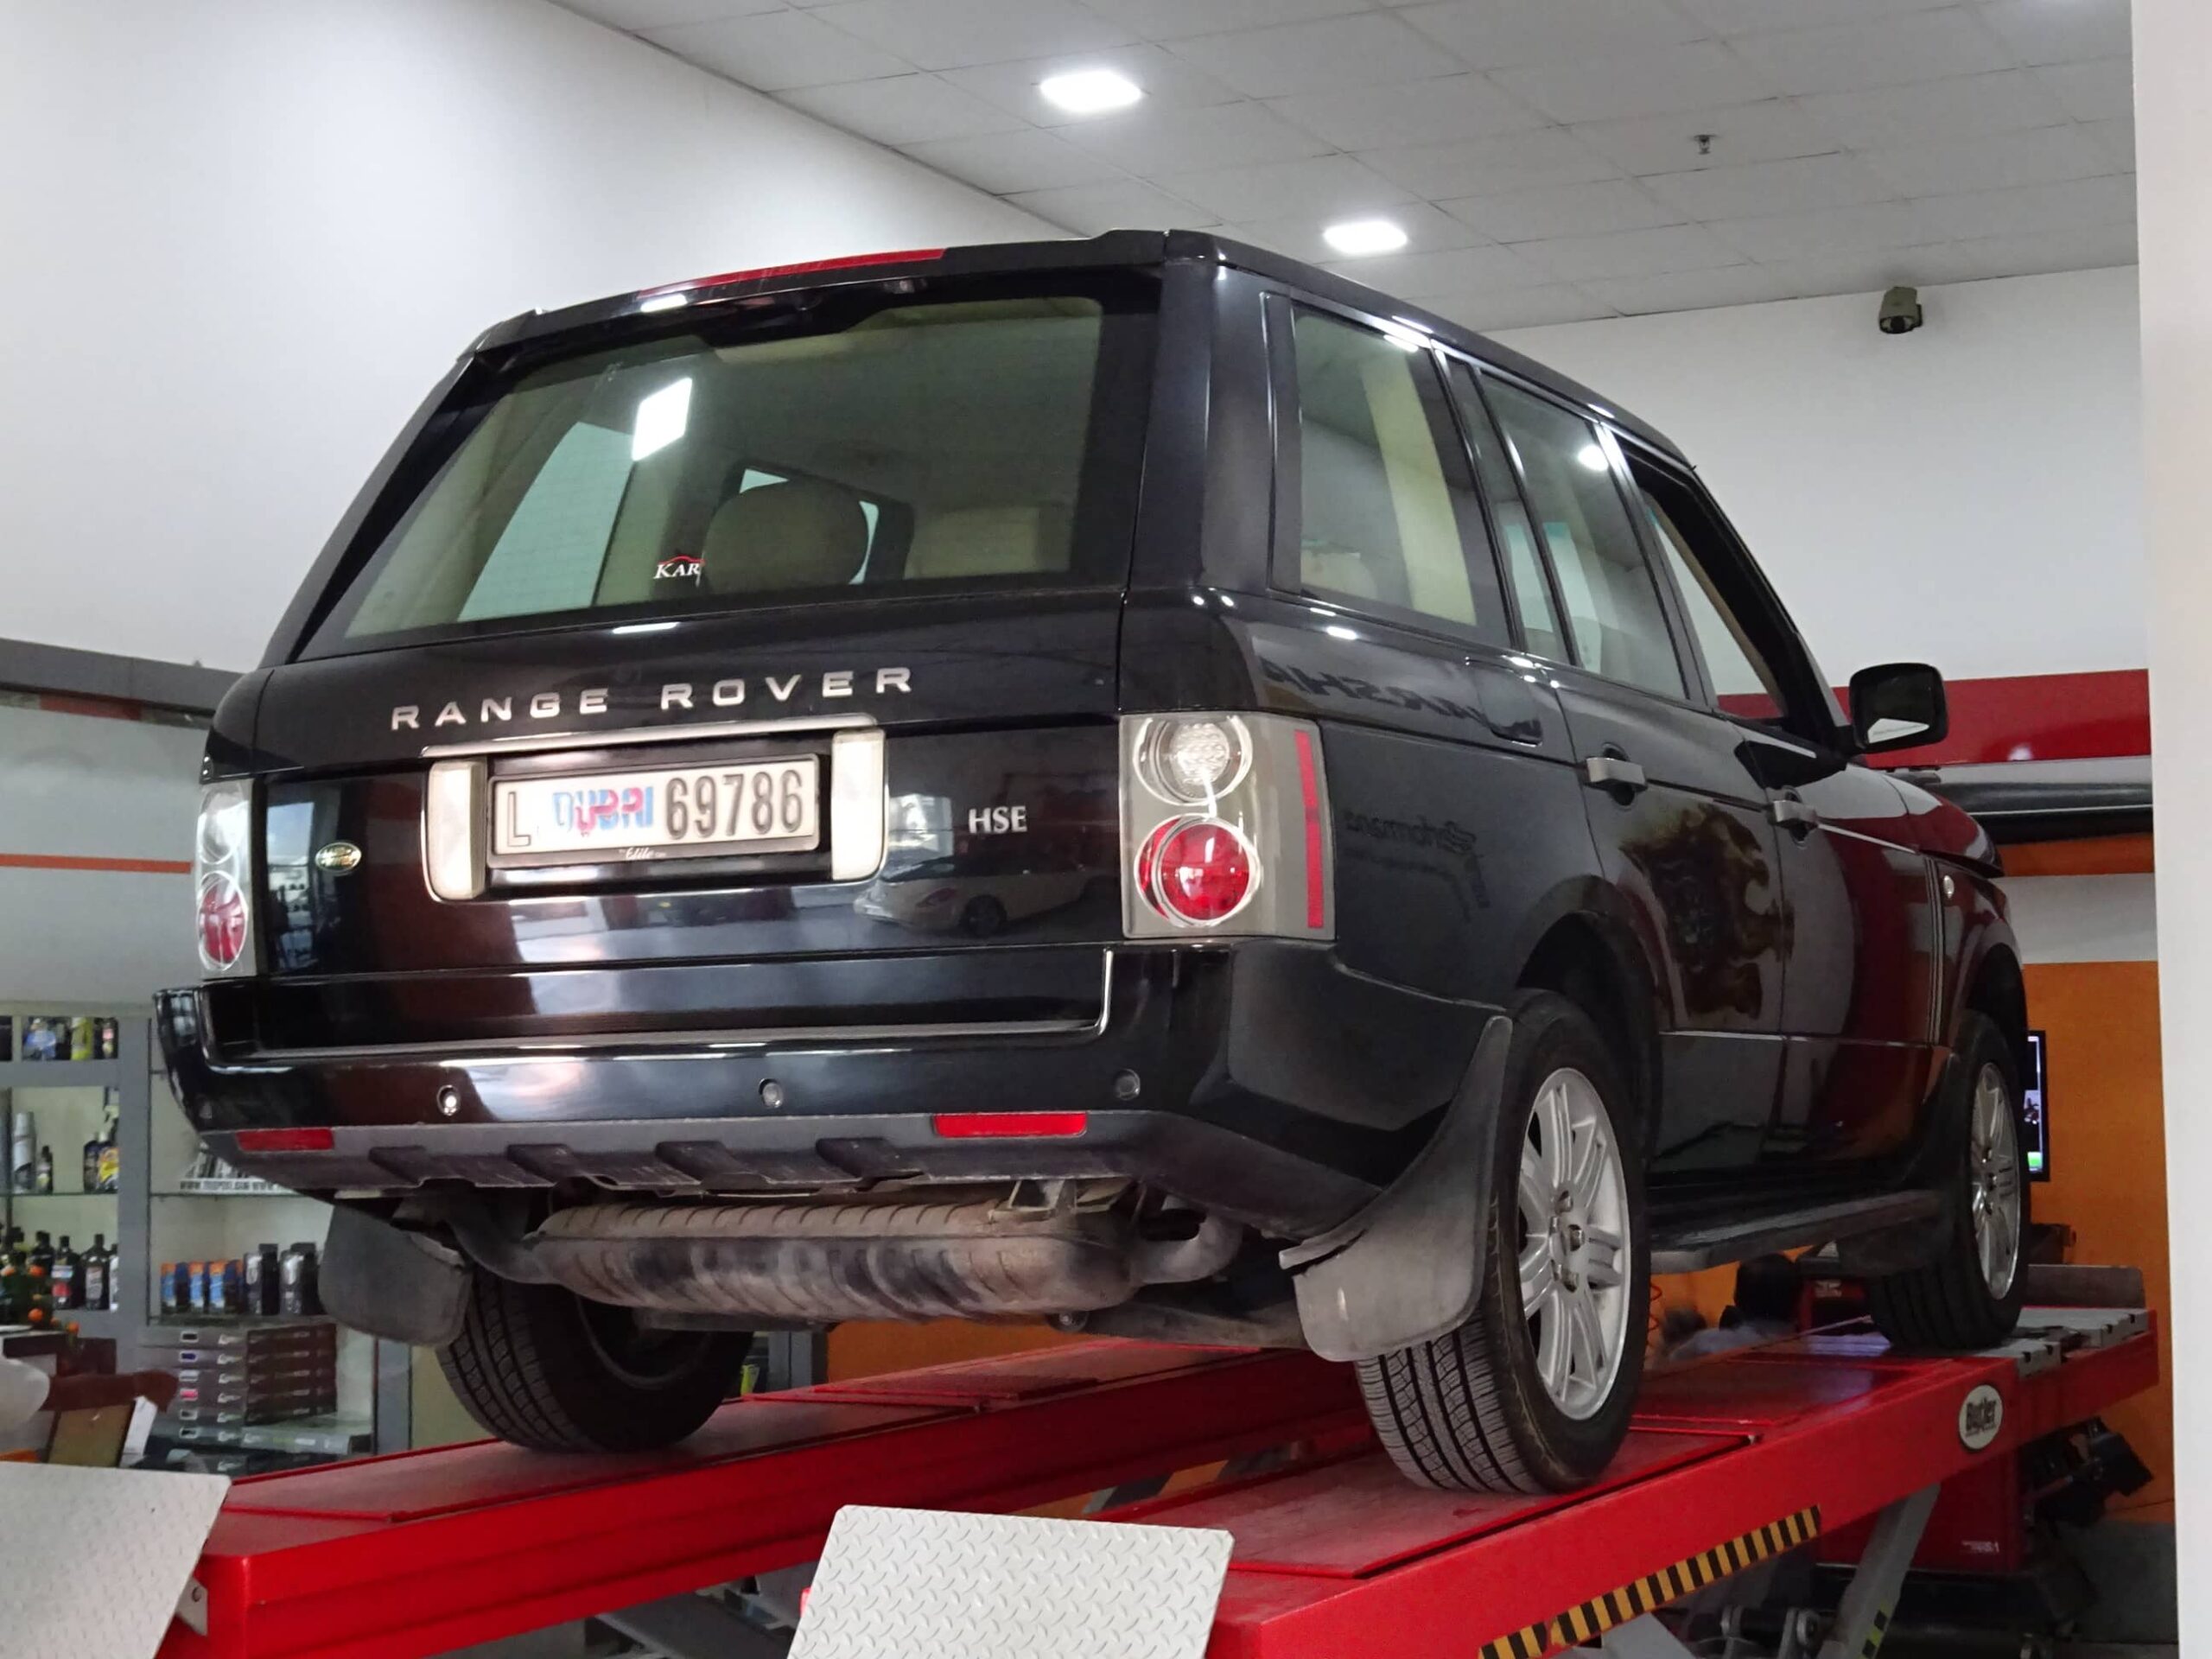 Range Rover repair and maintenance